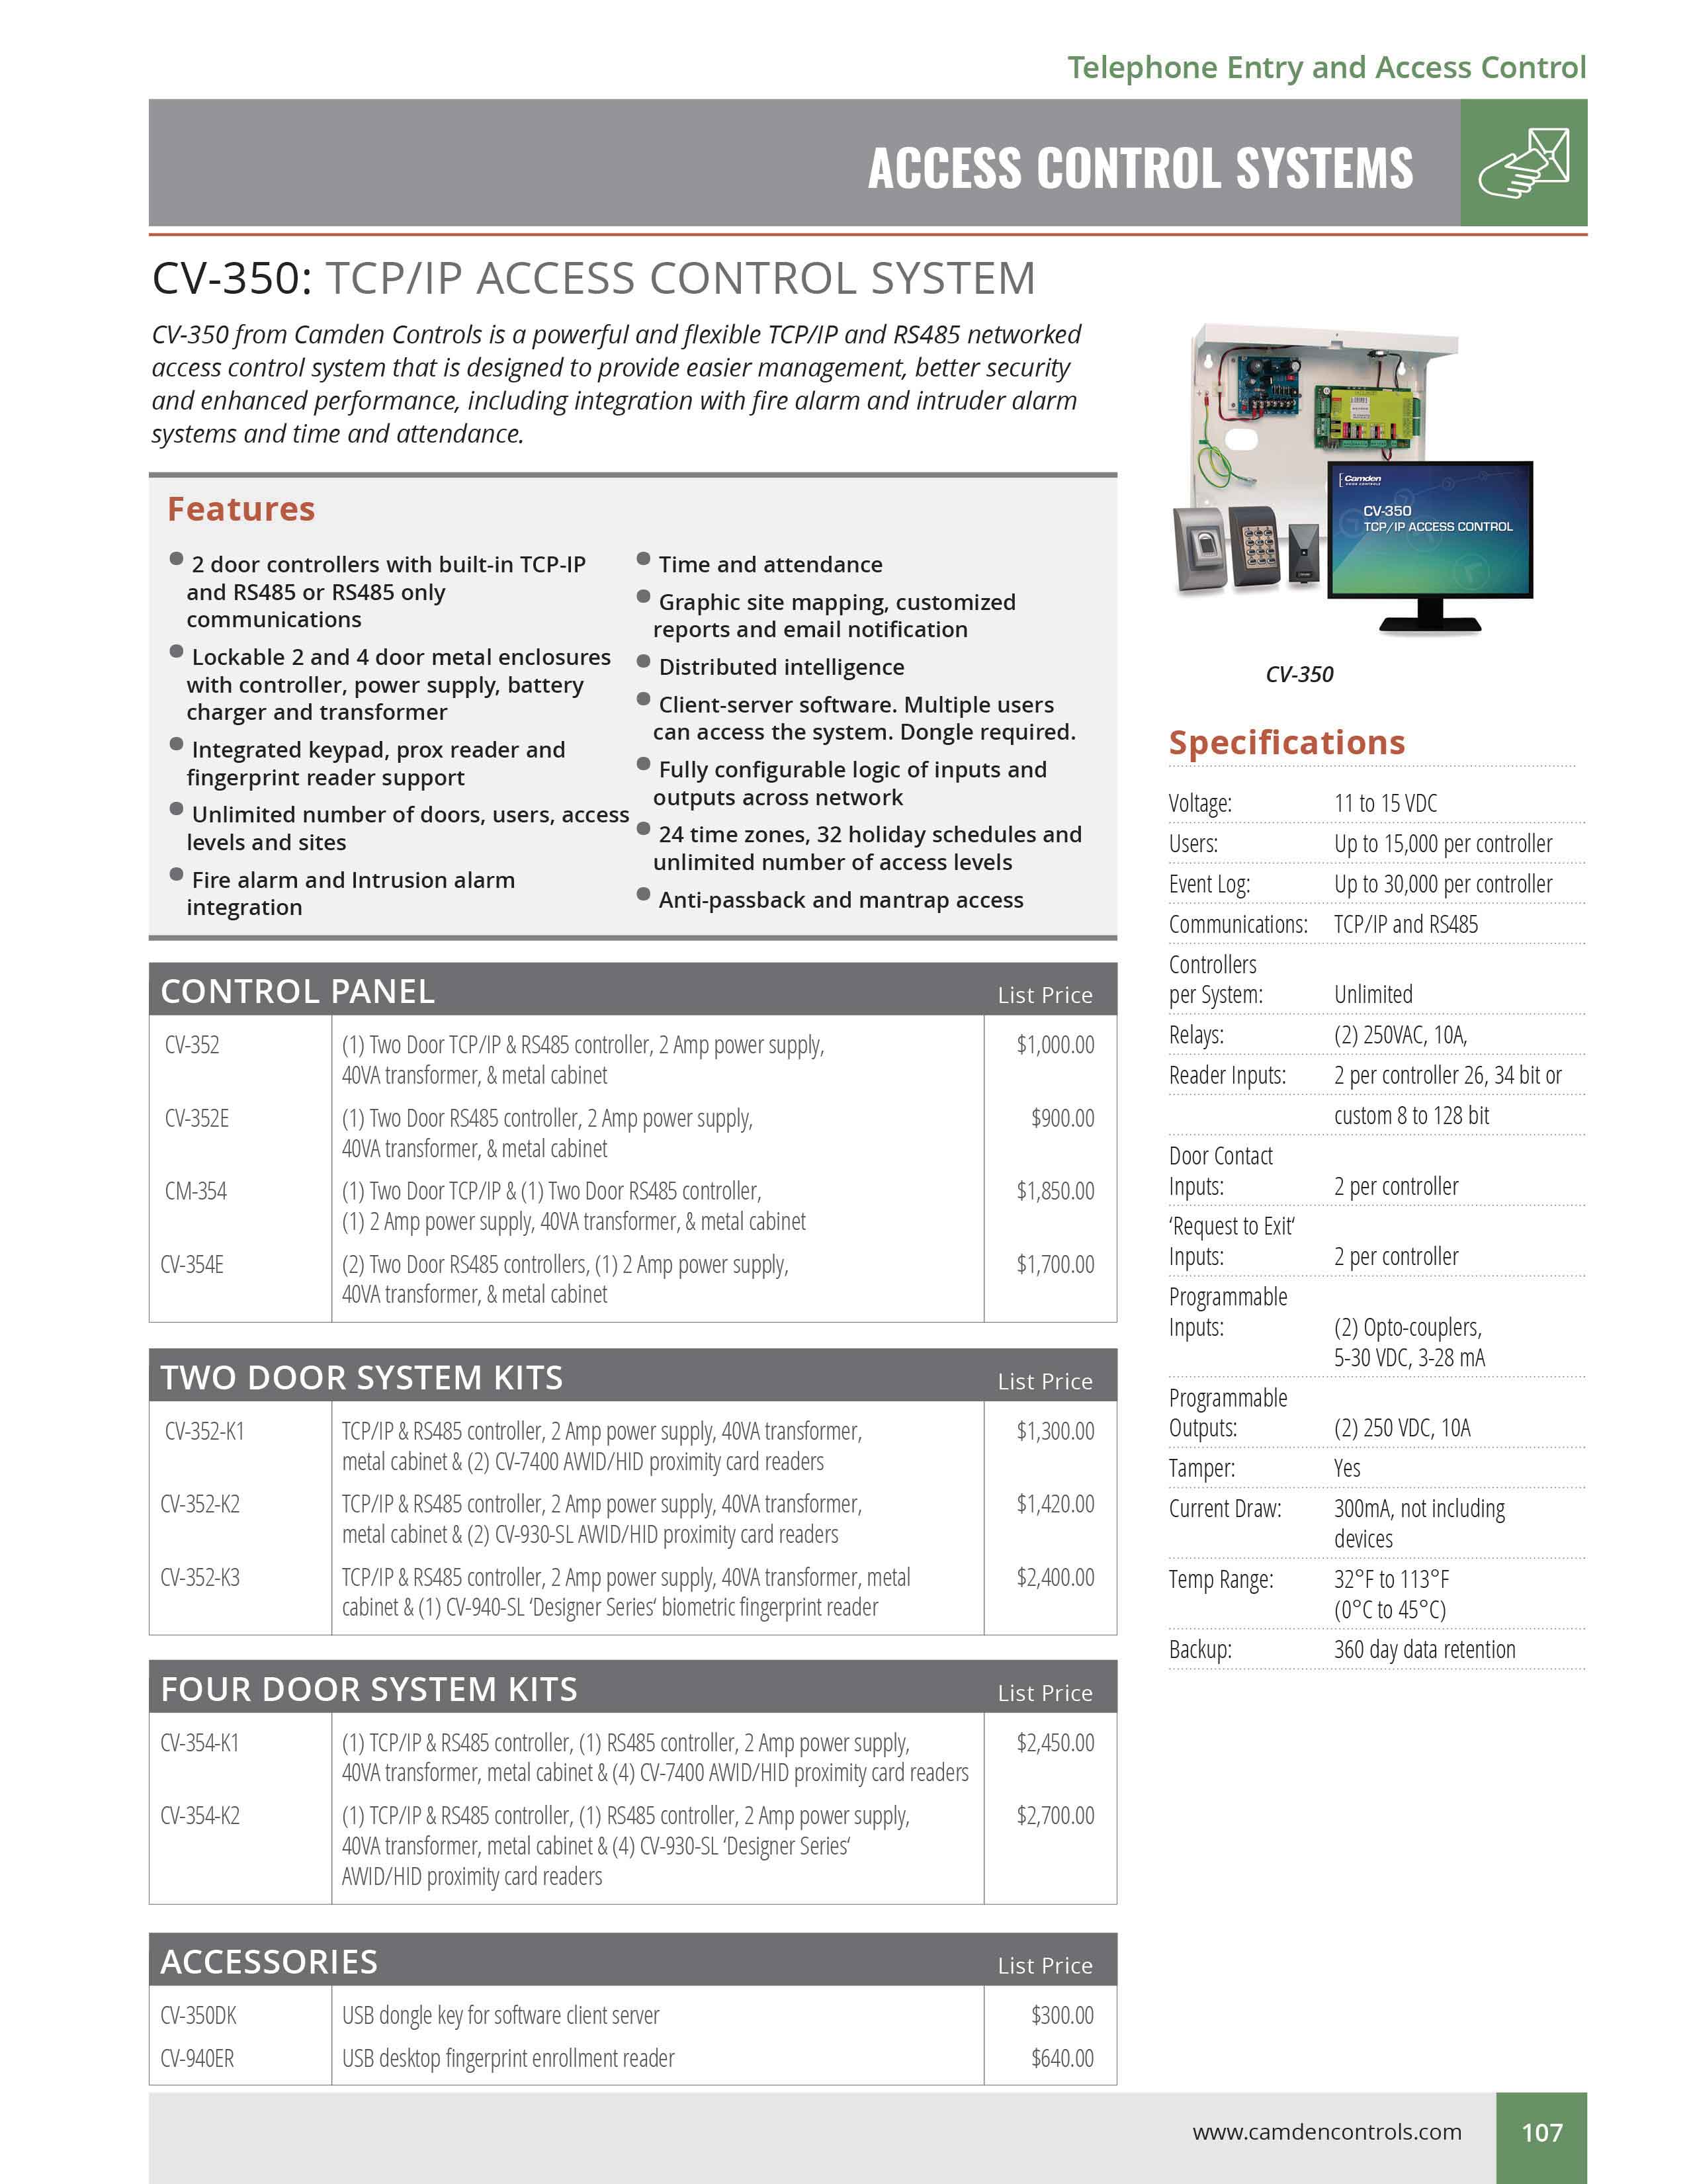 camdencontrols-c90-catalog